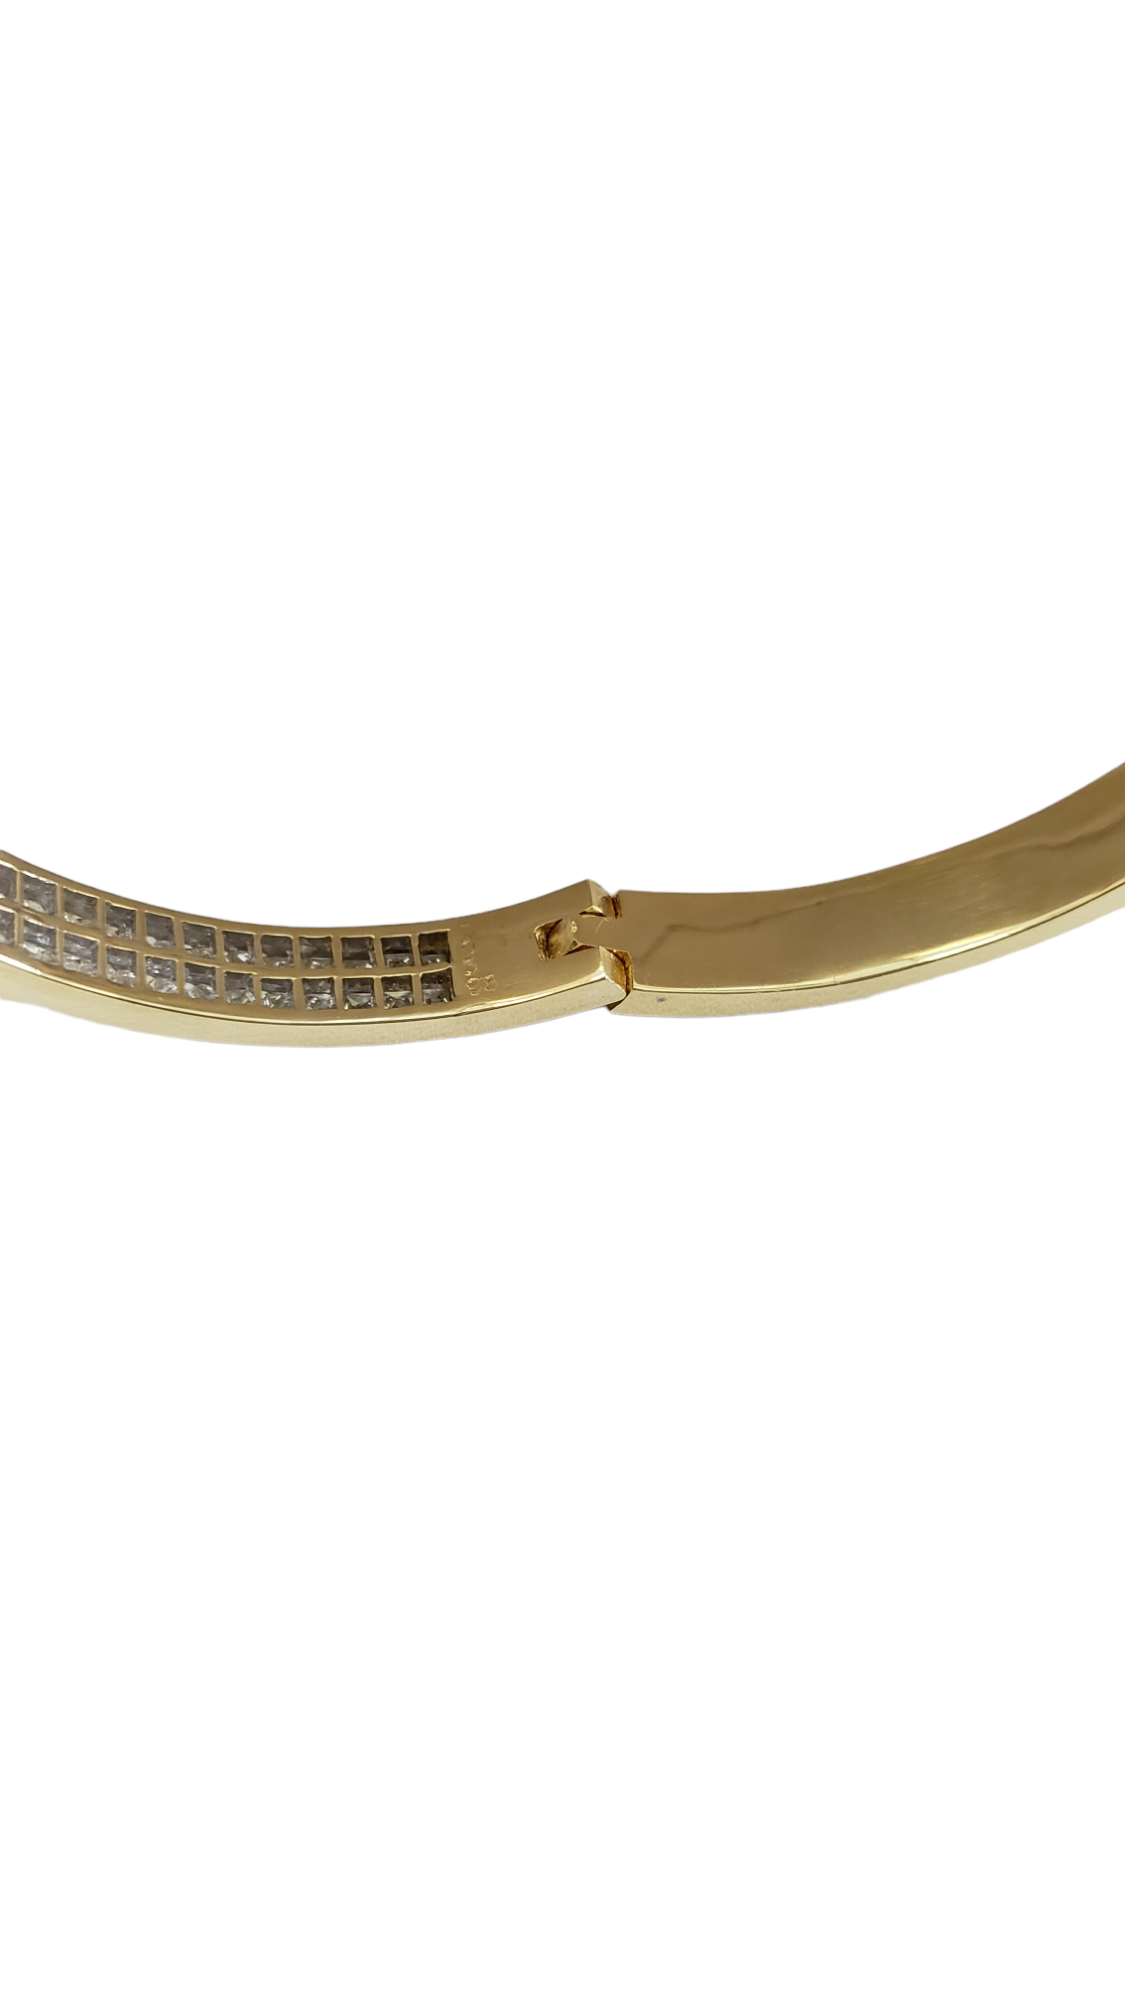 Diamond Princess Cut Invisible Set Bangle Bracelet made in 18-Karat Yellow Gold